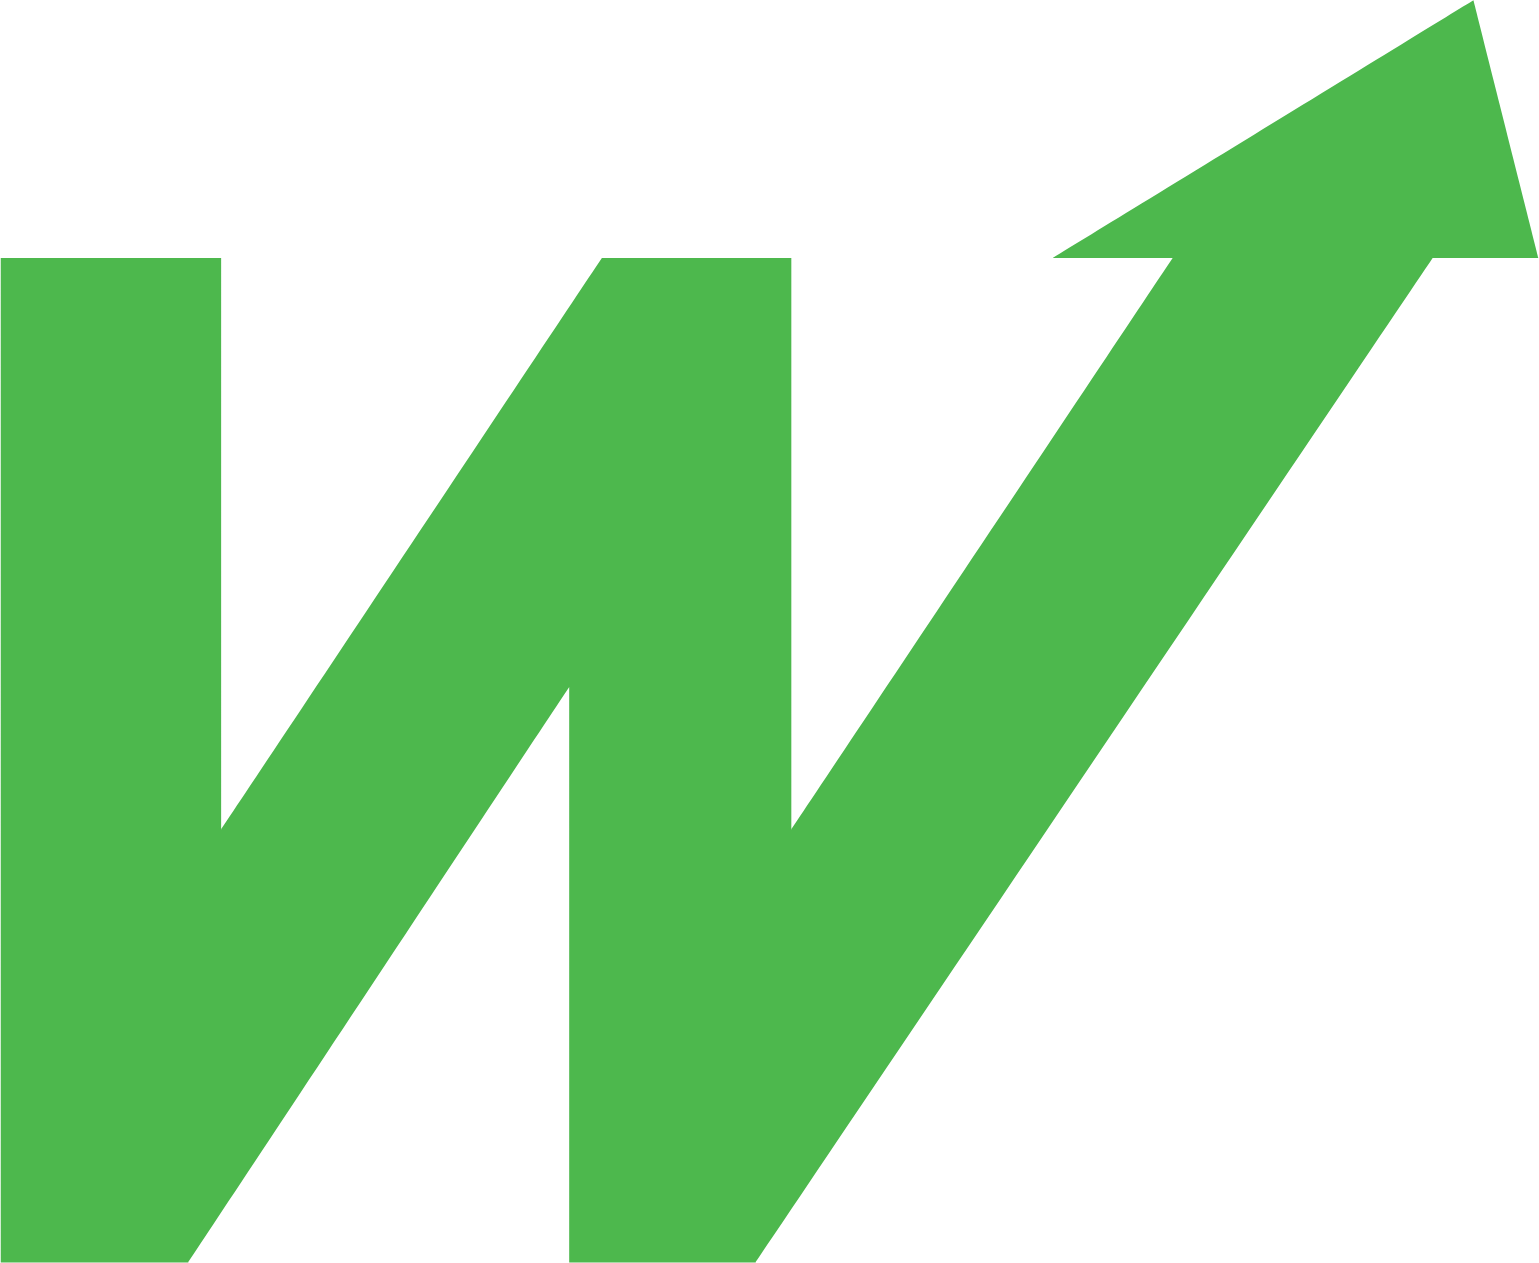 MarketWatch logo (PNG transparent)